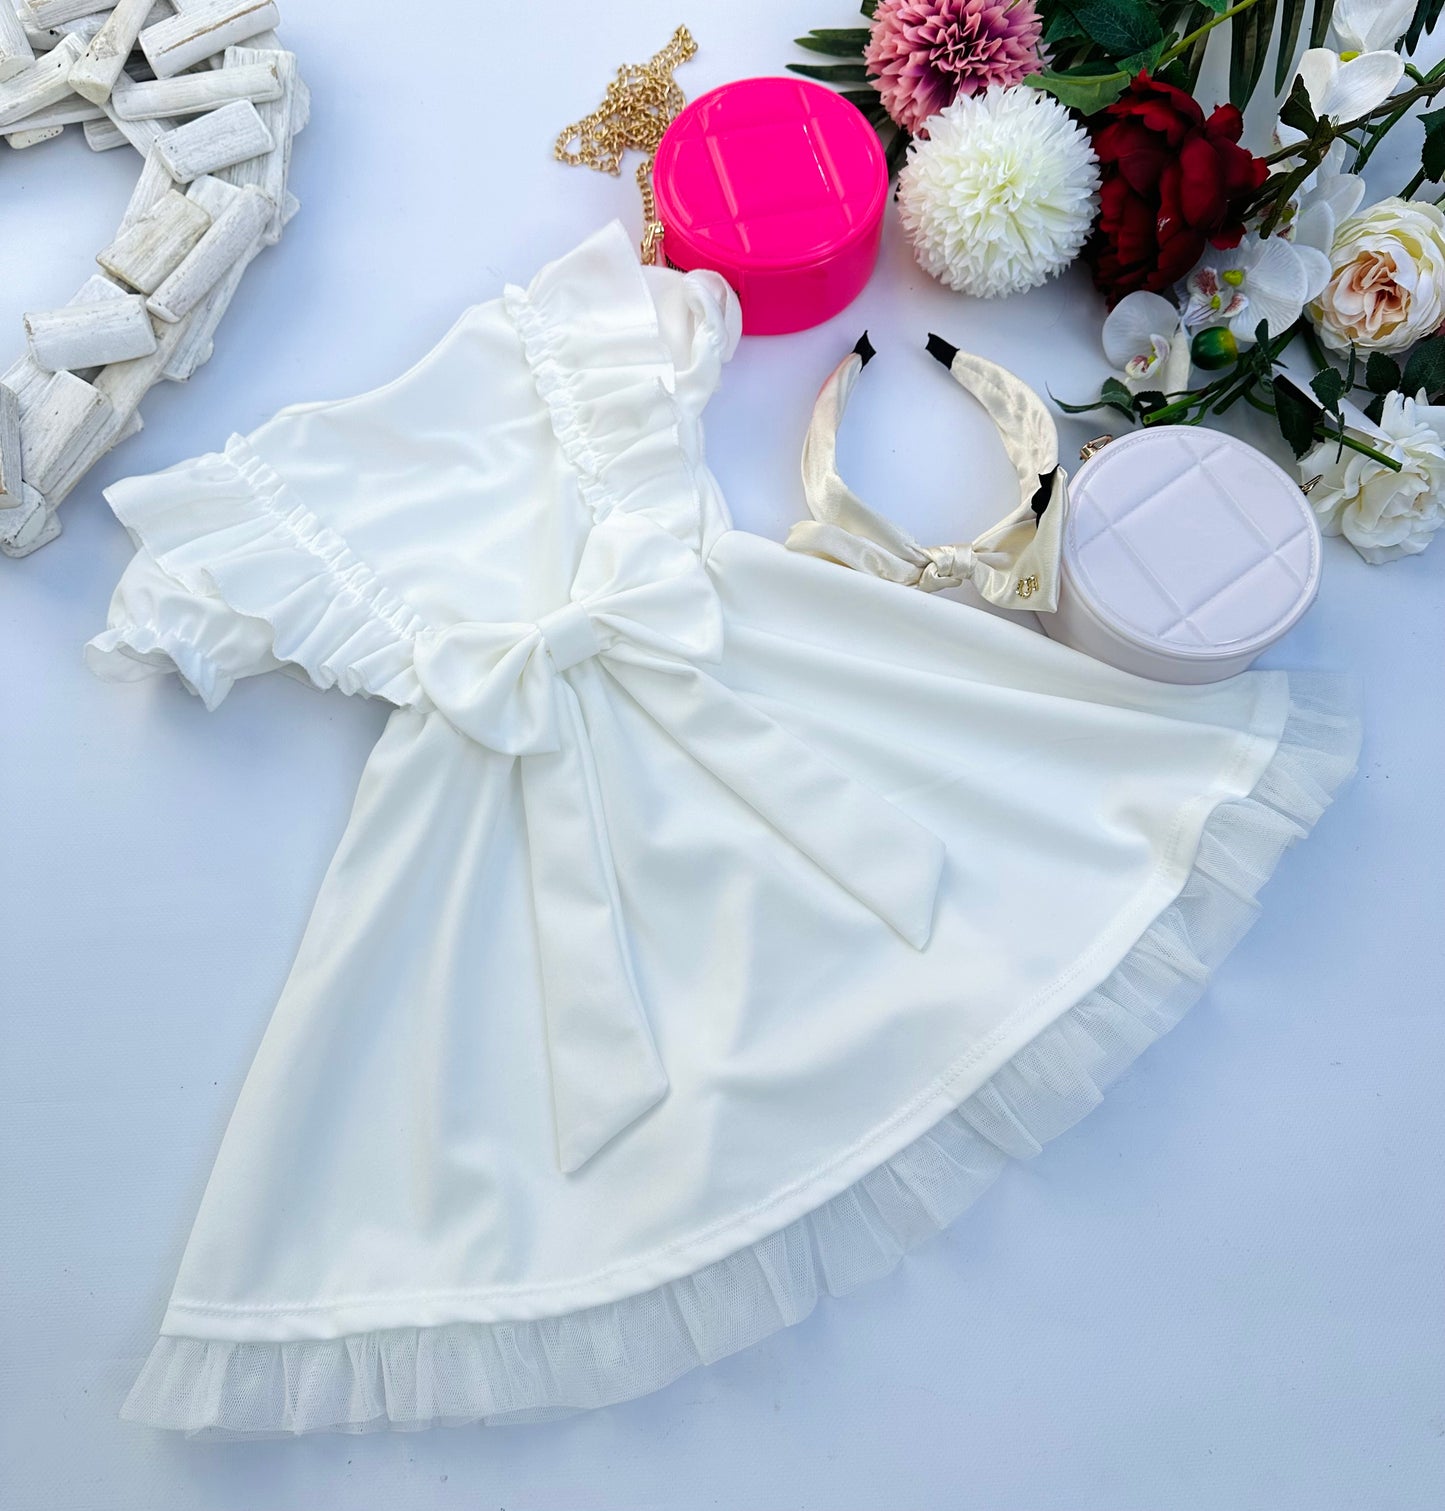 White bow dress